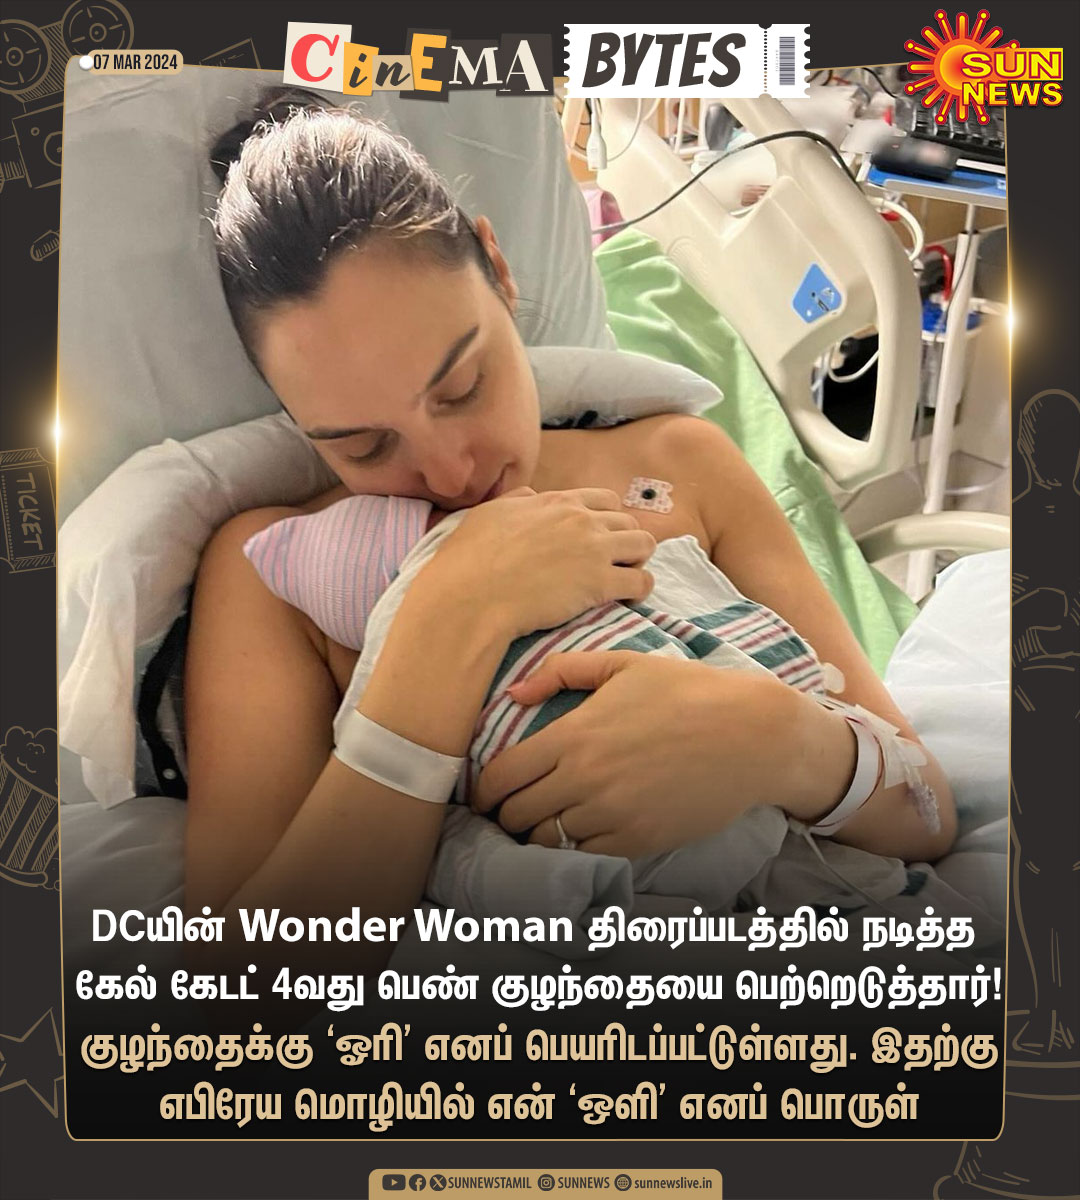 #CinemaBytes | 4வது மகளை பெற்றெடுத்தார் Wonder Woman கேல் கேடட்!

#SunNews | #GalGadot | #WonderWoman